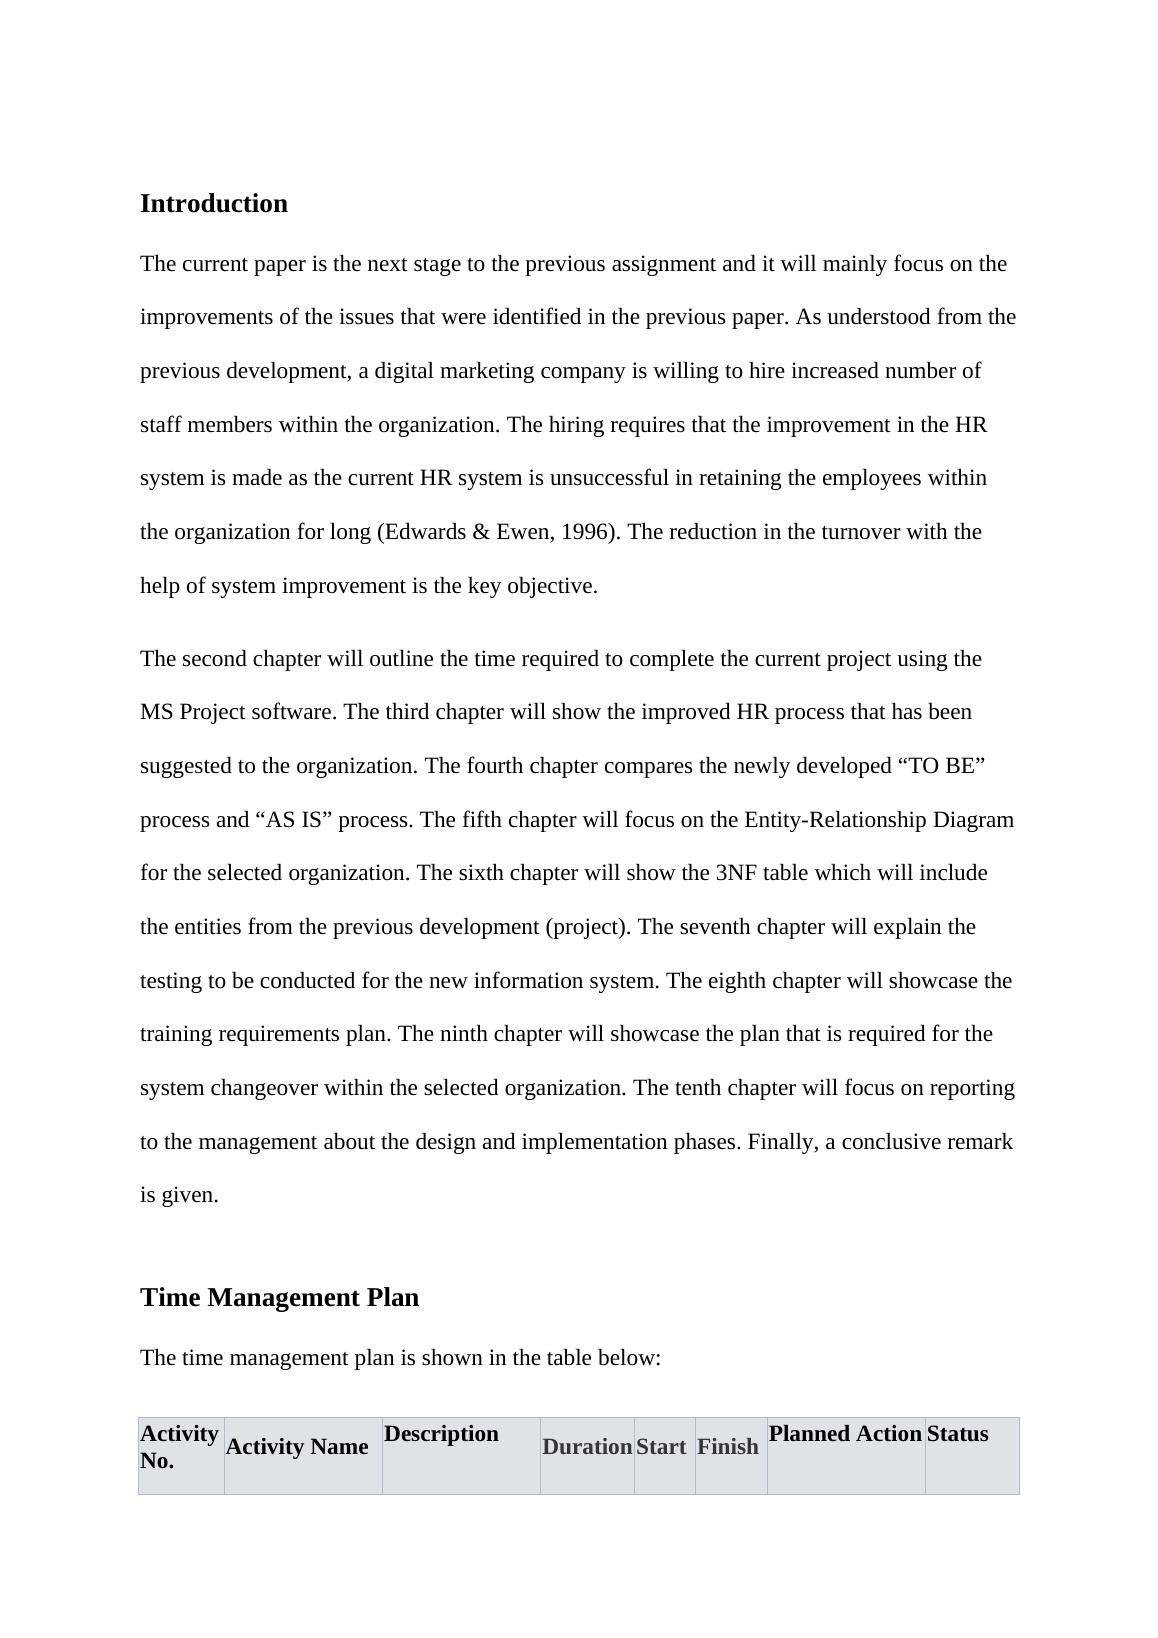 Paper on HR Improvement Process_4